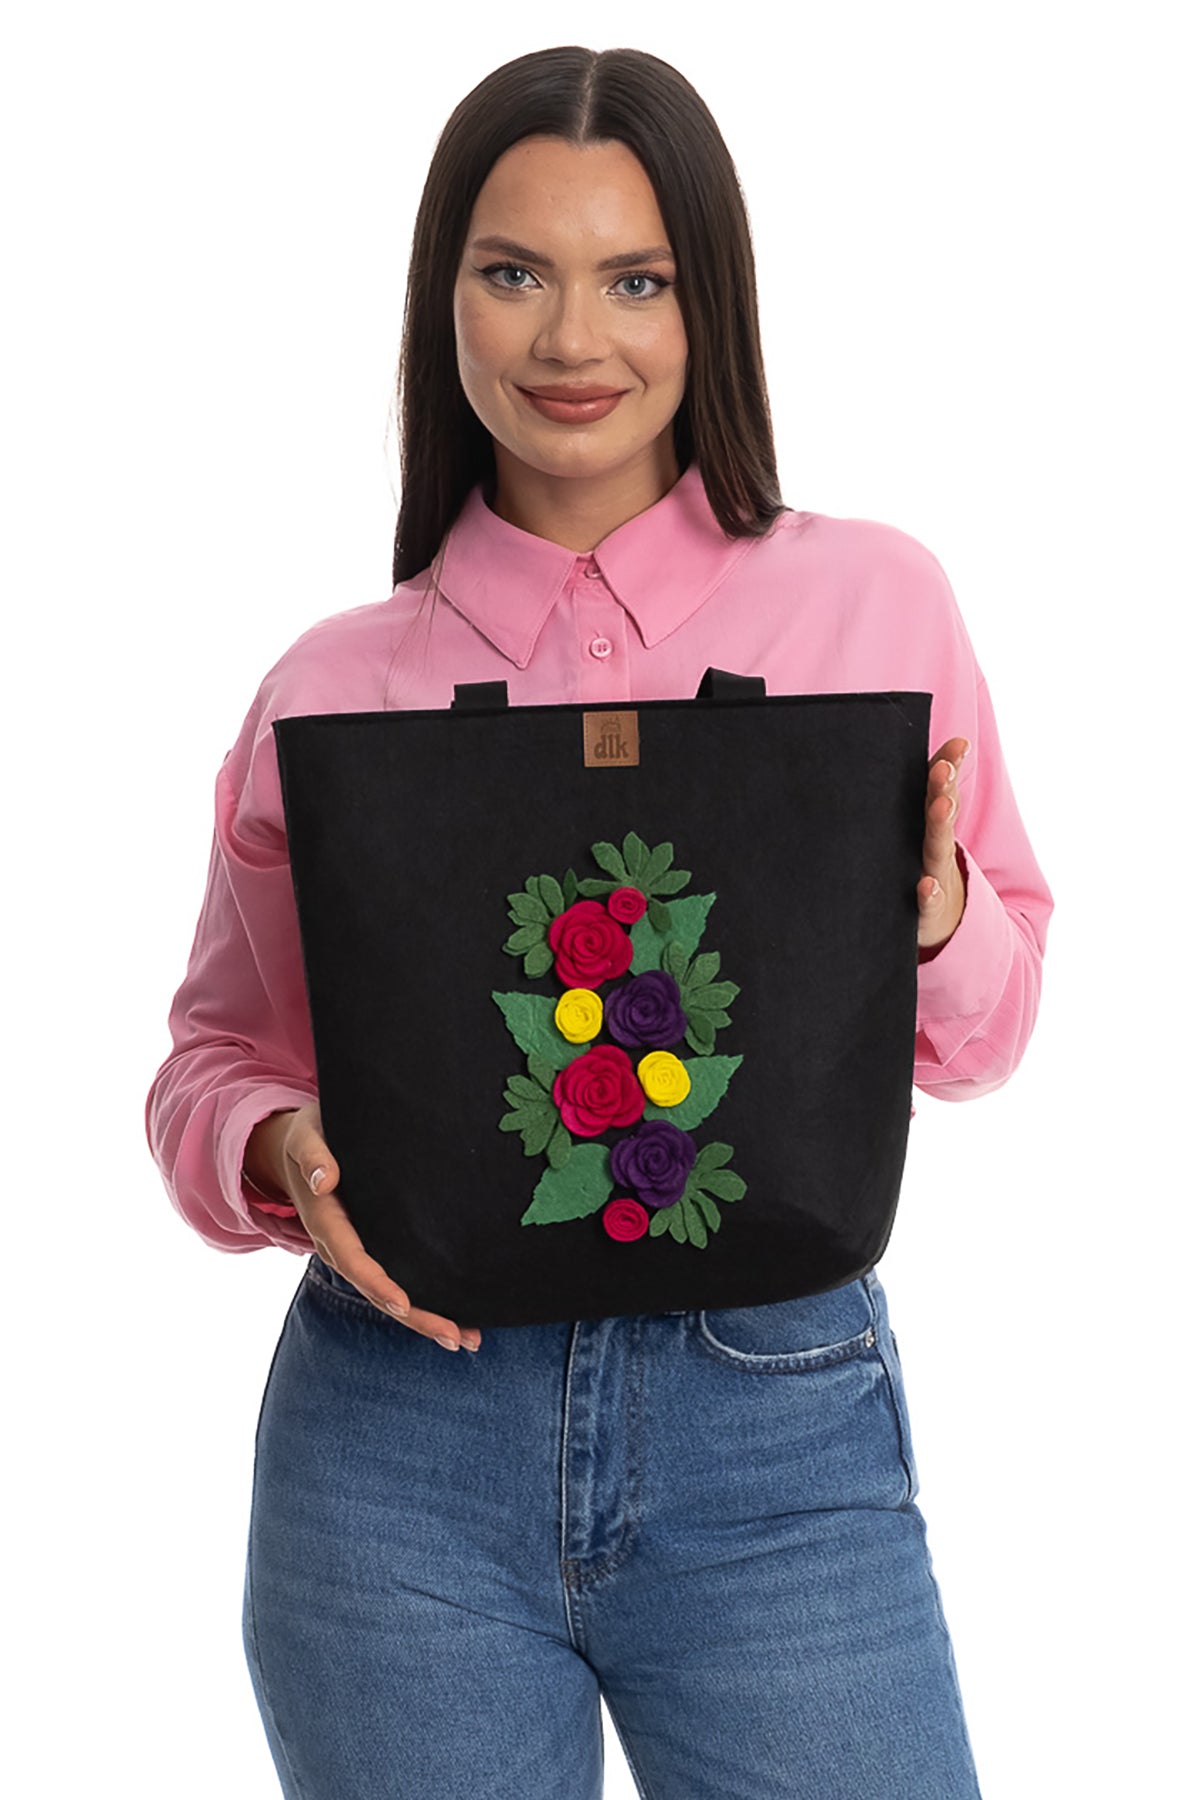 Handmade Medium Size Felt Shoulder Bag - Flower Basket -35x31cm